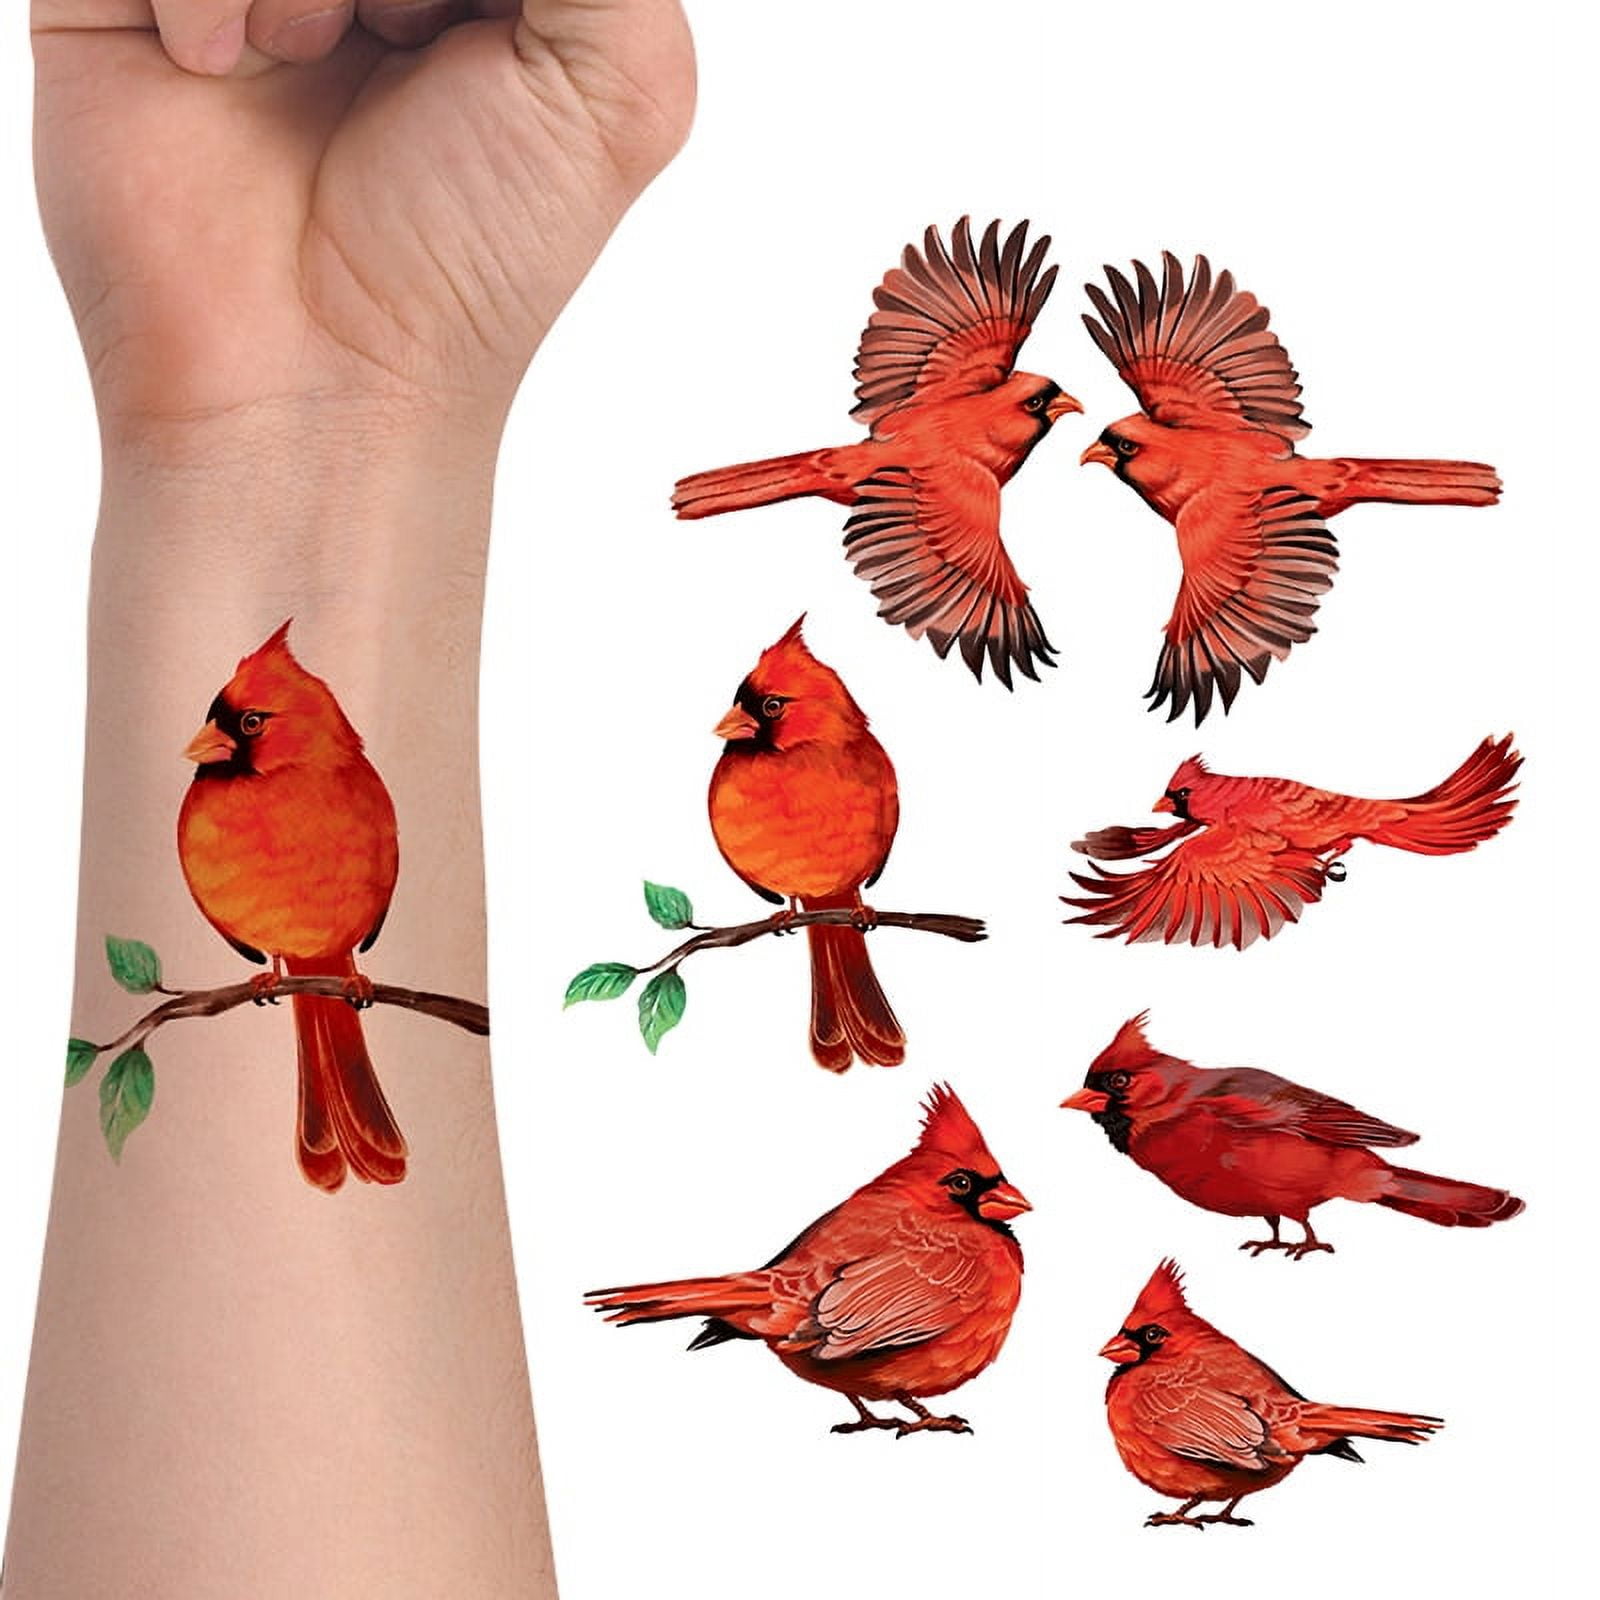 Tattoo uploaded by Nate • Black birds tattoo - Tattoo Chiang Mai  #onlyblackart #bird #ChiangMai #blackwork #blxckink #btattooing  #blackworkers #tattooart #Tattoodo #tattooculture #tattoochiangmai  #tattooartistchiangmai #blackworktattoo #tatouage • Tattoodo